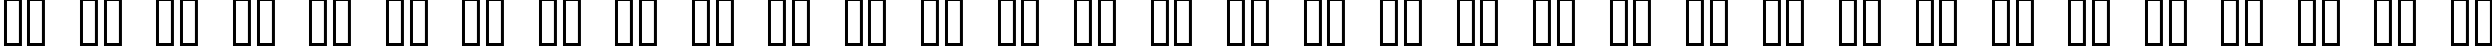 Пример написания русского алфавита шрифтом Ukiran Jawi